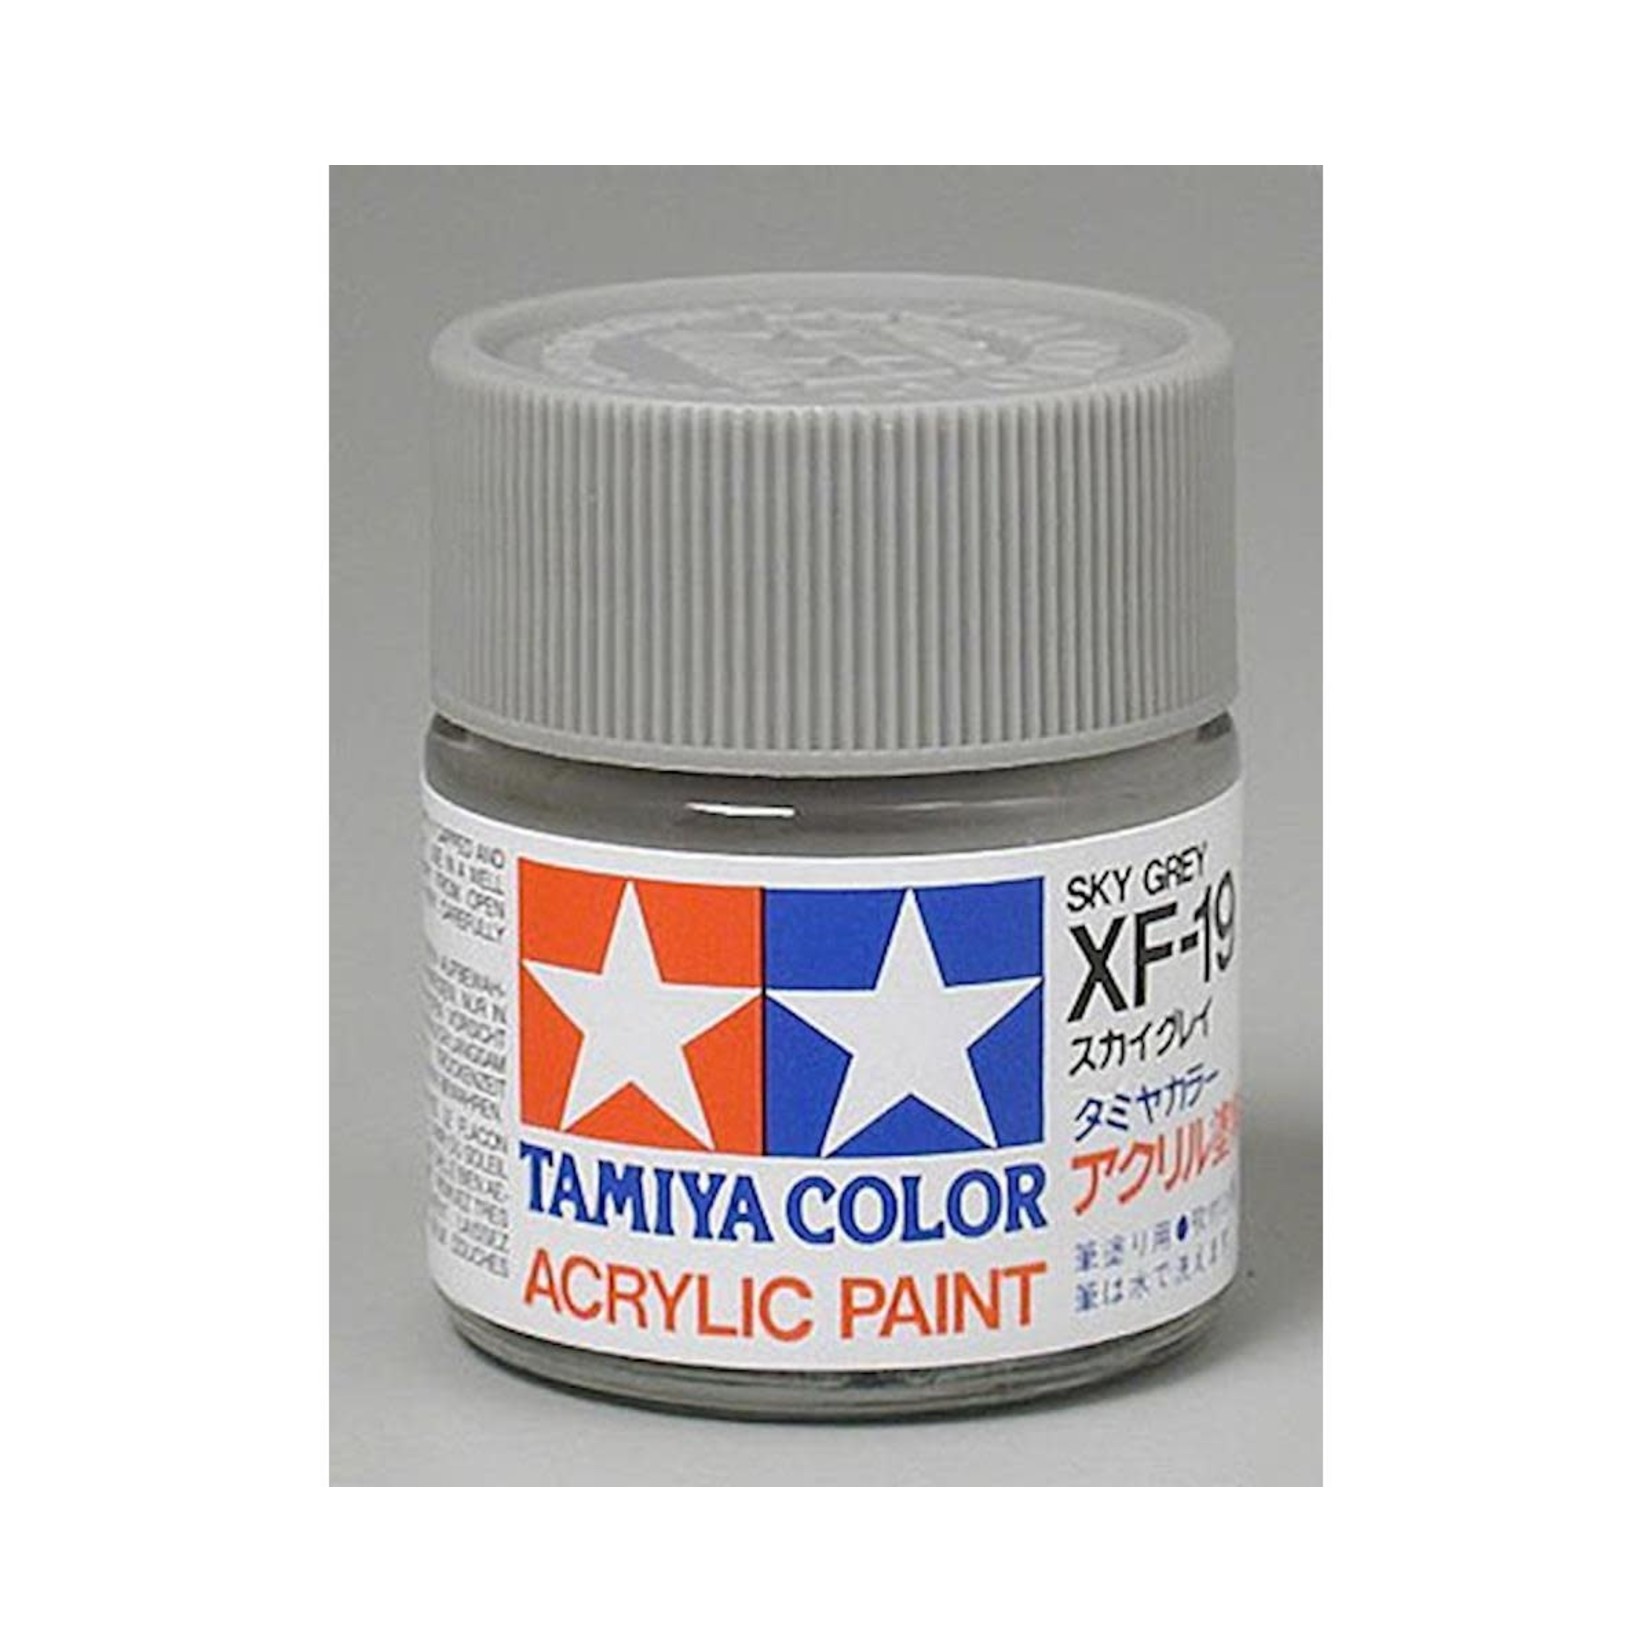 Tamiya Tamiya Flat Sky Grey Acrylic Paint (23ml) #XF-19